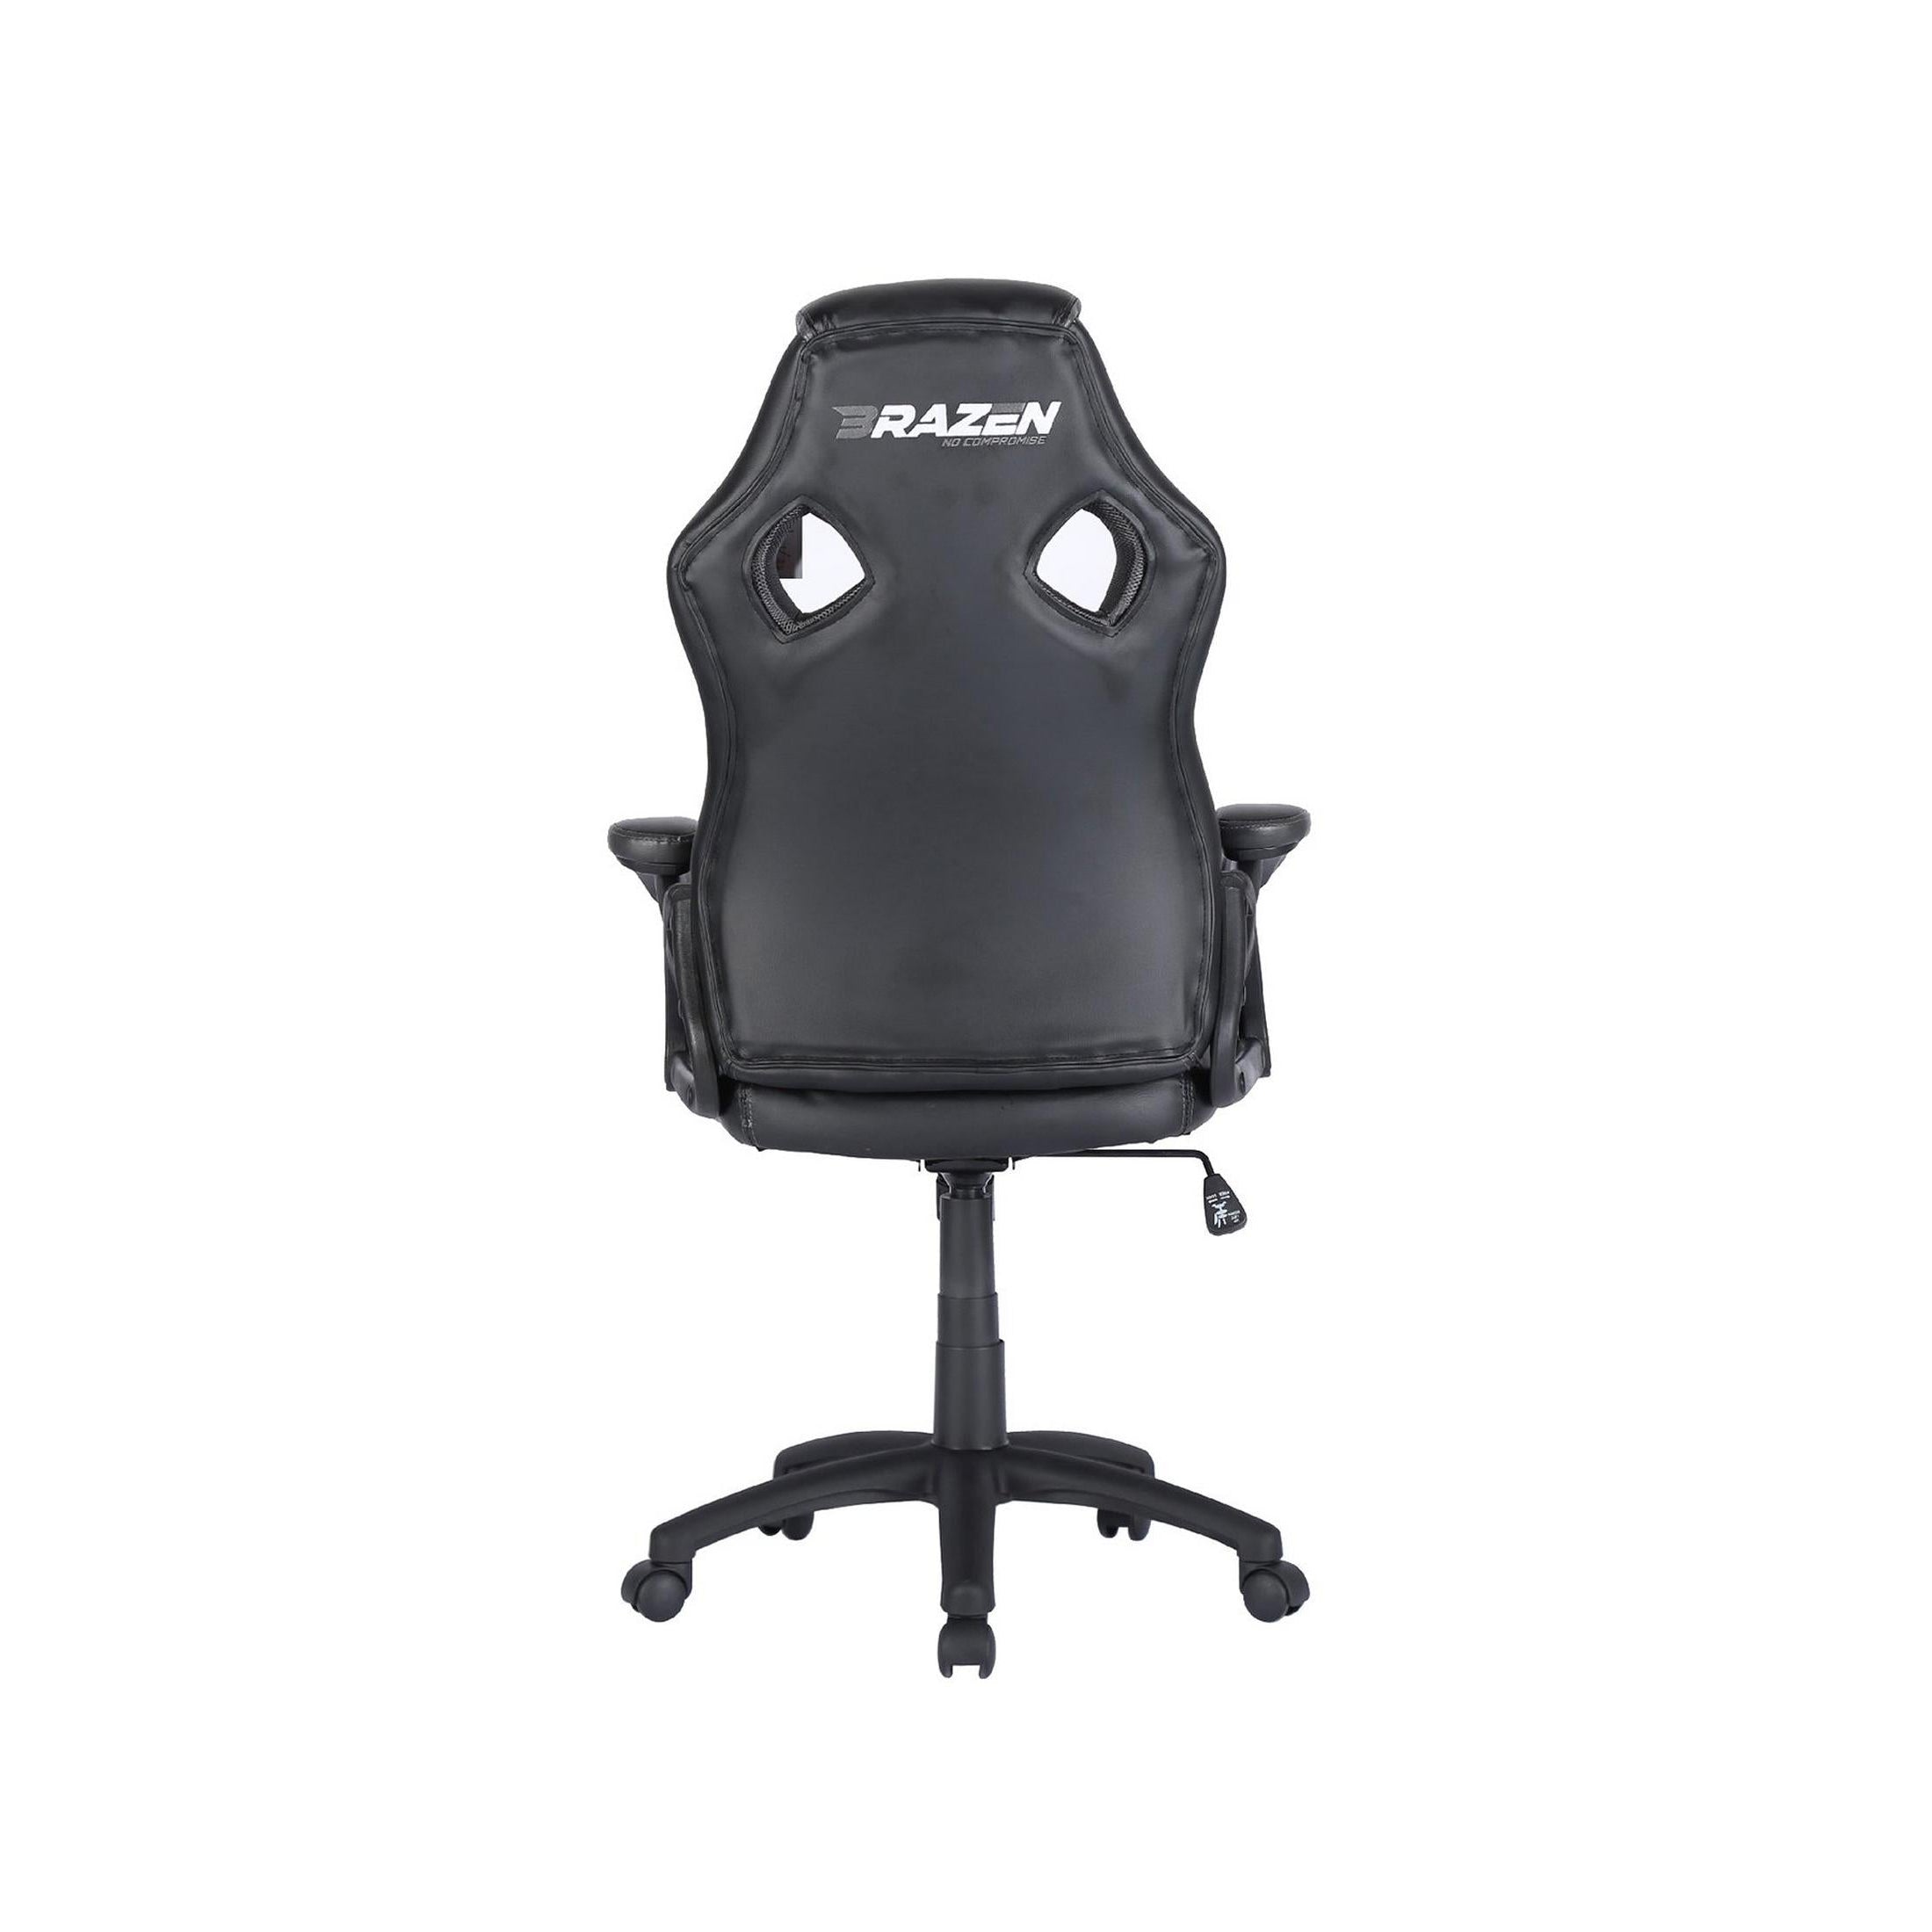 BraZen Puma PC Gaming Chair - Black / Grey